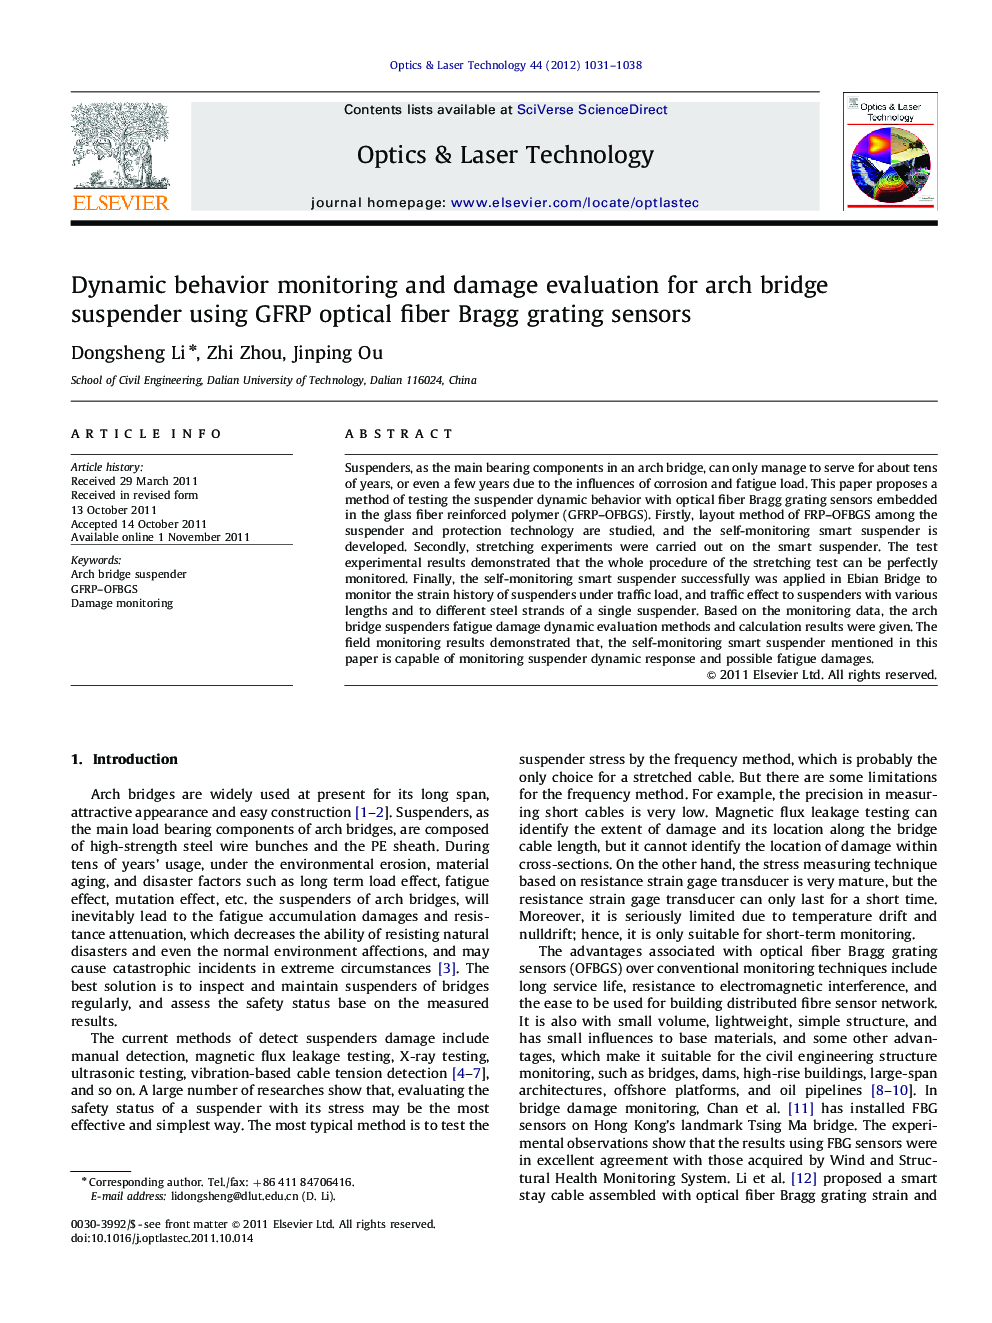 Dynamic behavior monitoring and damage evaluation for arch bridge suspender using GFRP optical fiber Bragg grating sensors